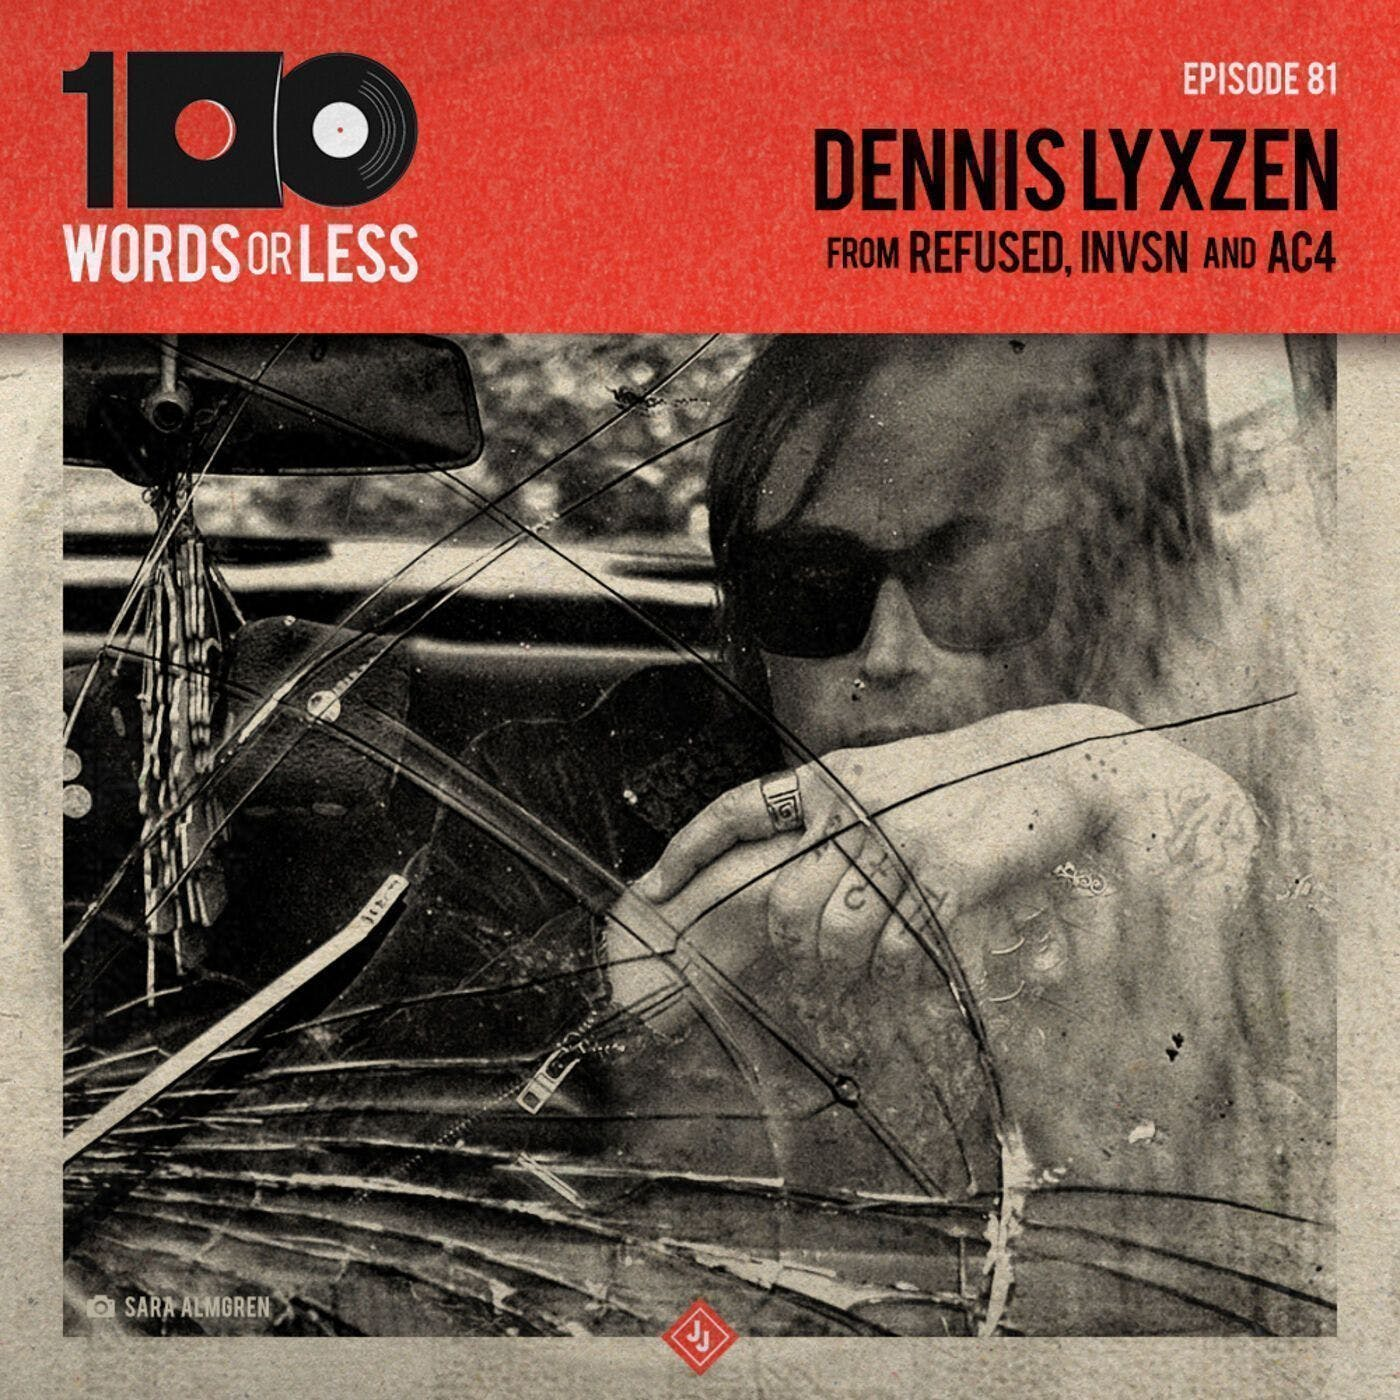 Dennis Lyxen from INVSN/AC4/Refused